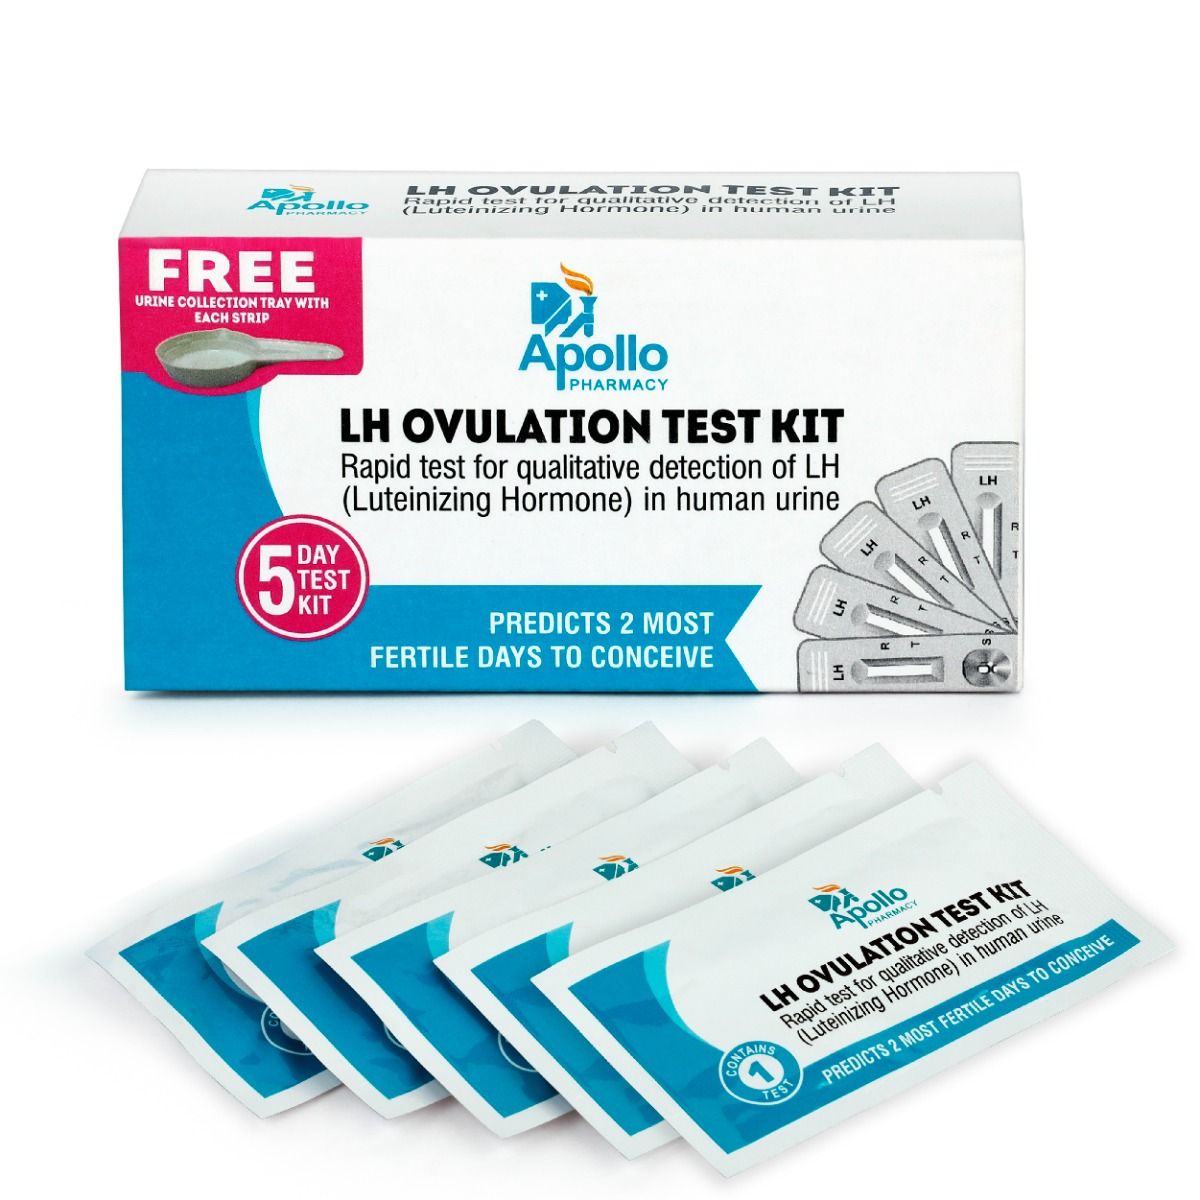 Buy Apollo Pharmacy LH Ovulation 5 Day Test Kit, 1 Kit Online